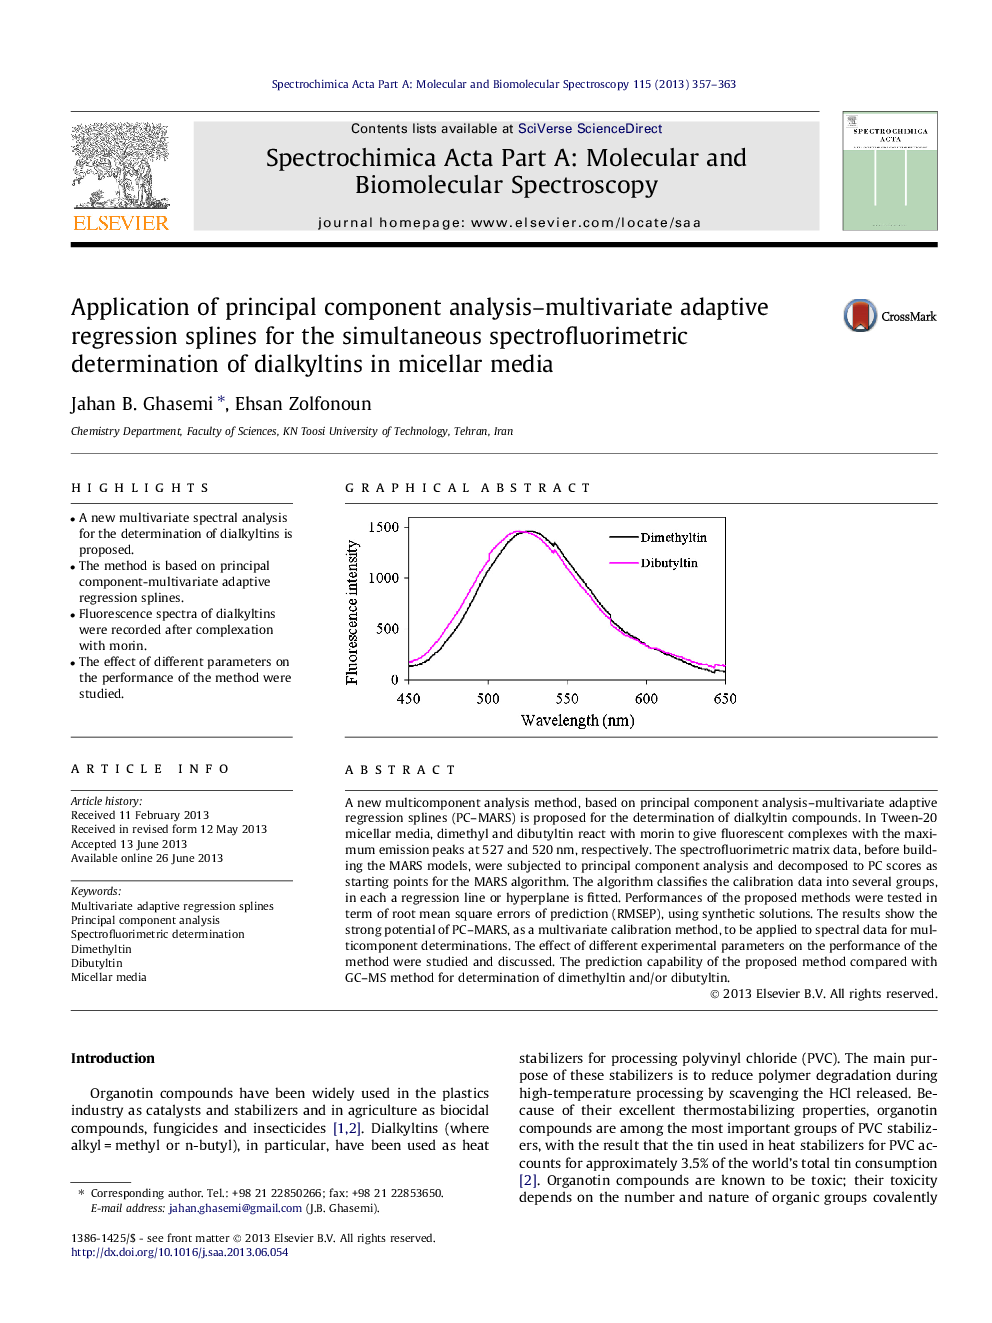 Application of principal component analysis-multivariate adaptive regression splines for the simultaneous spectrofluorimetric determination of dialkyltins in micellar media